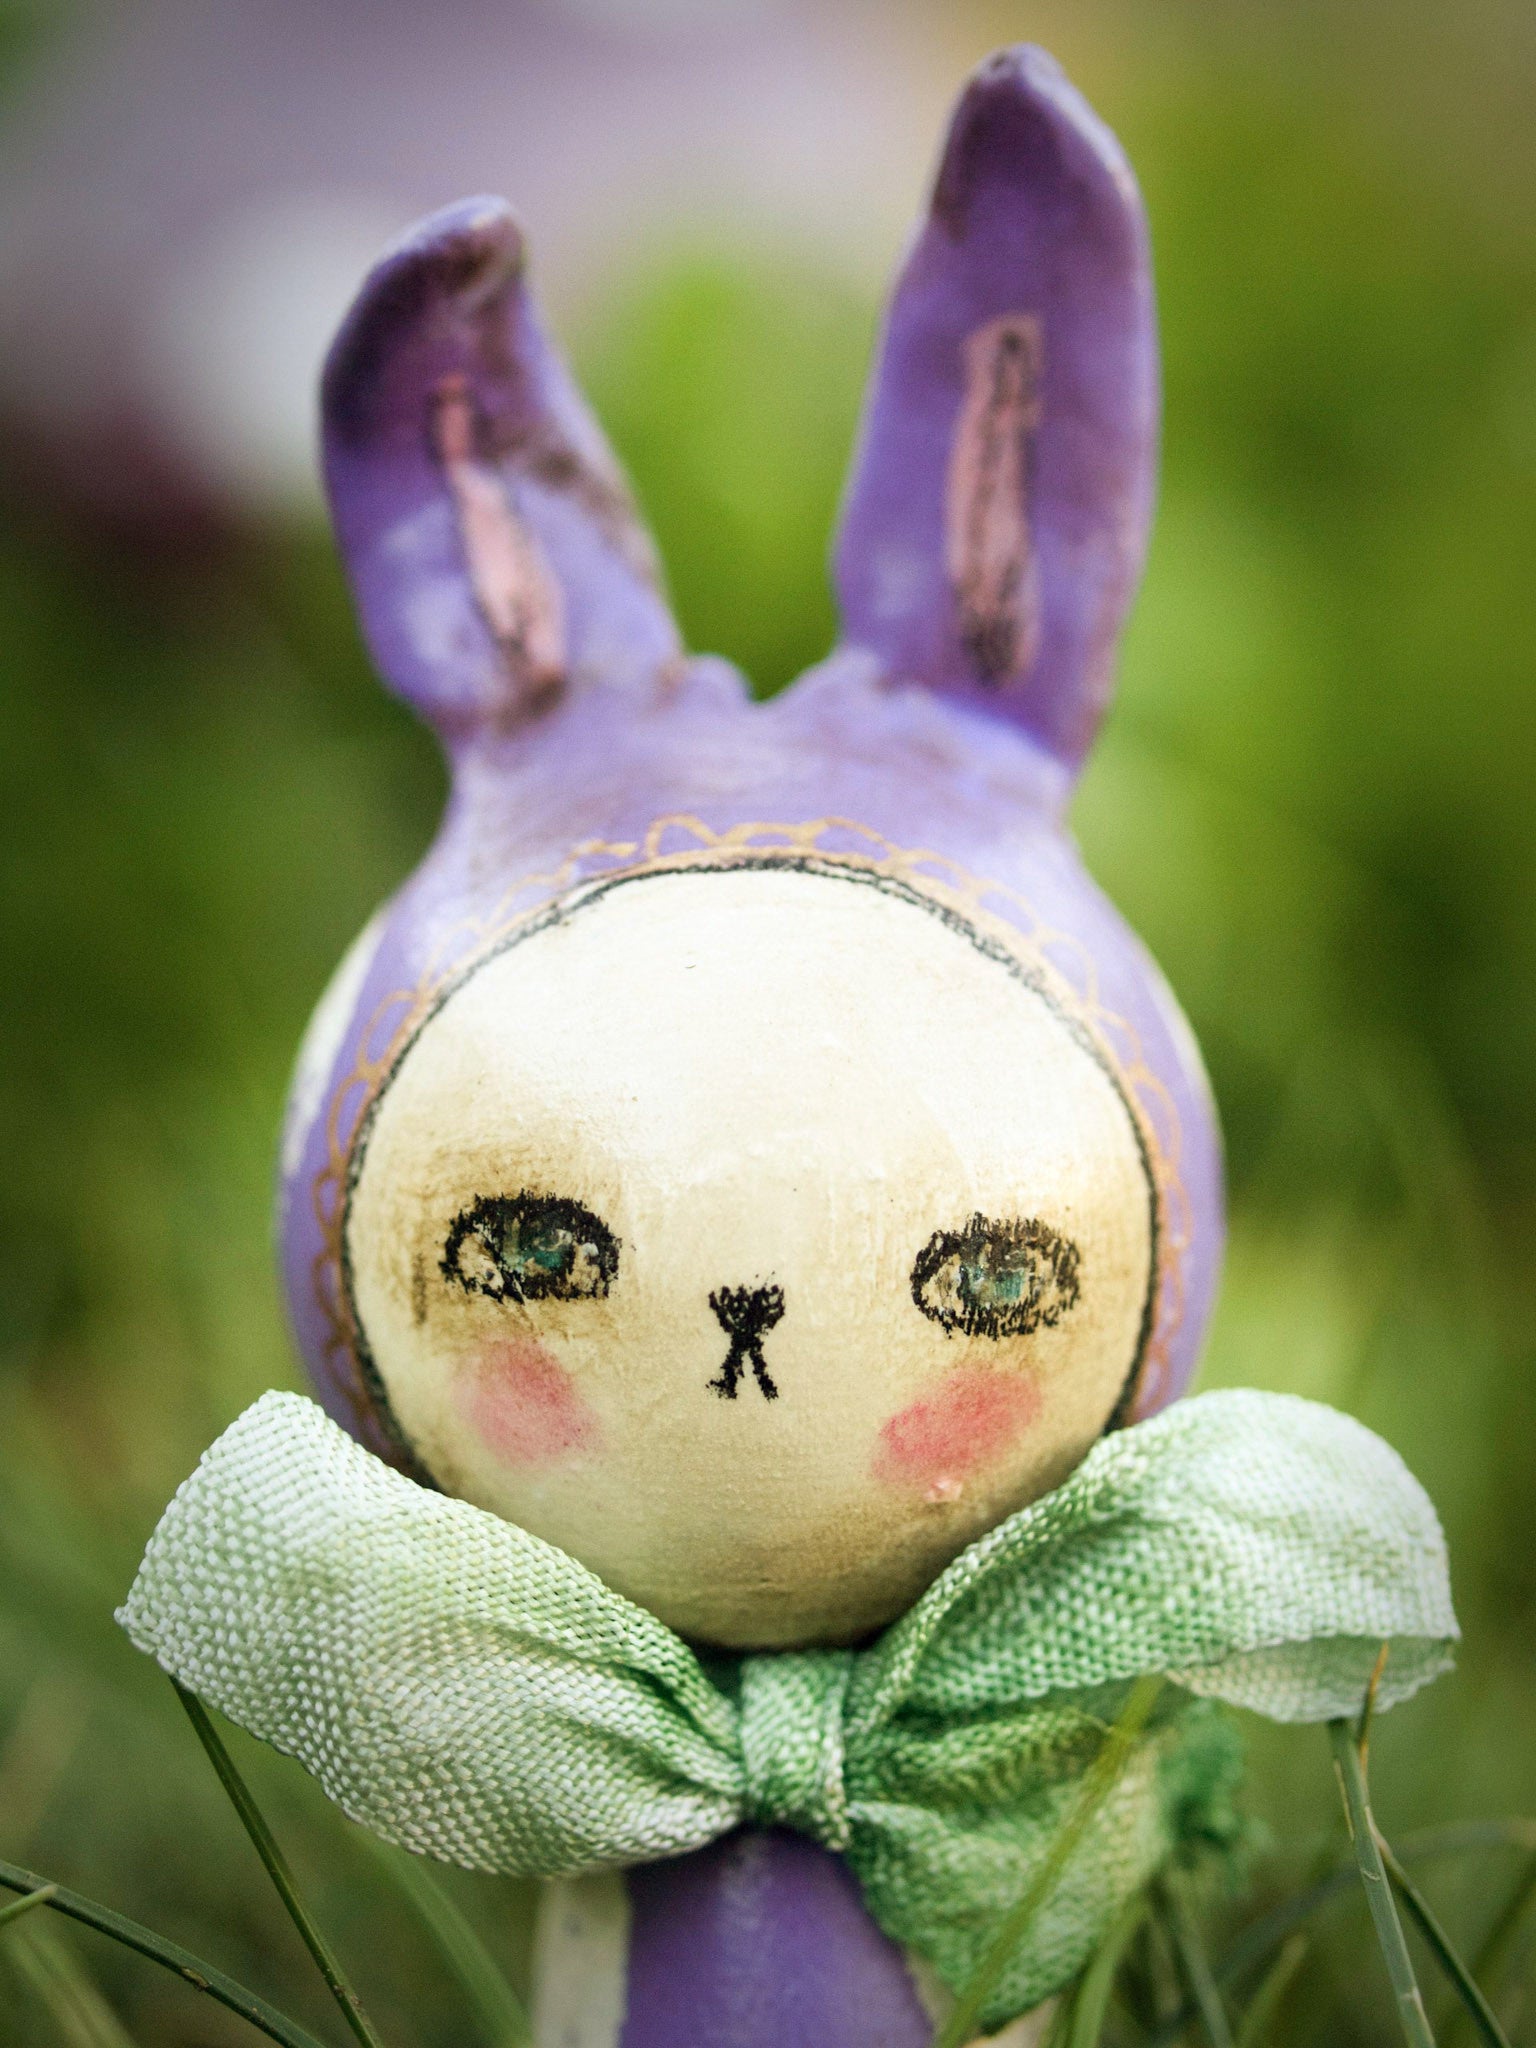 Monday, the purple kokeshi Easter bunny, Miniature Dolls by Danita Art